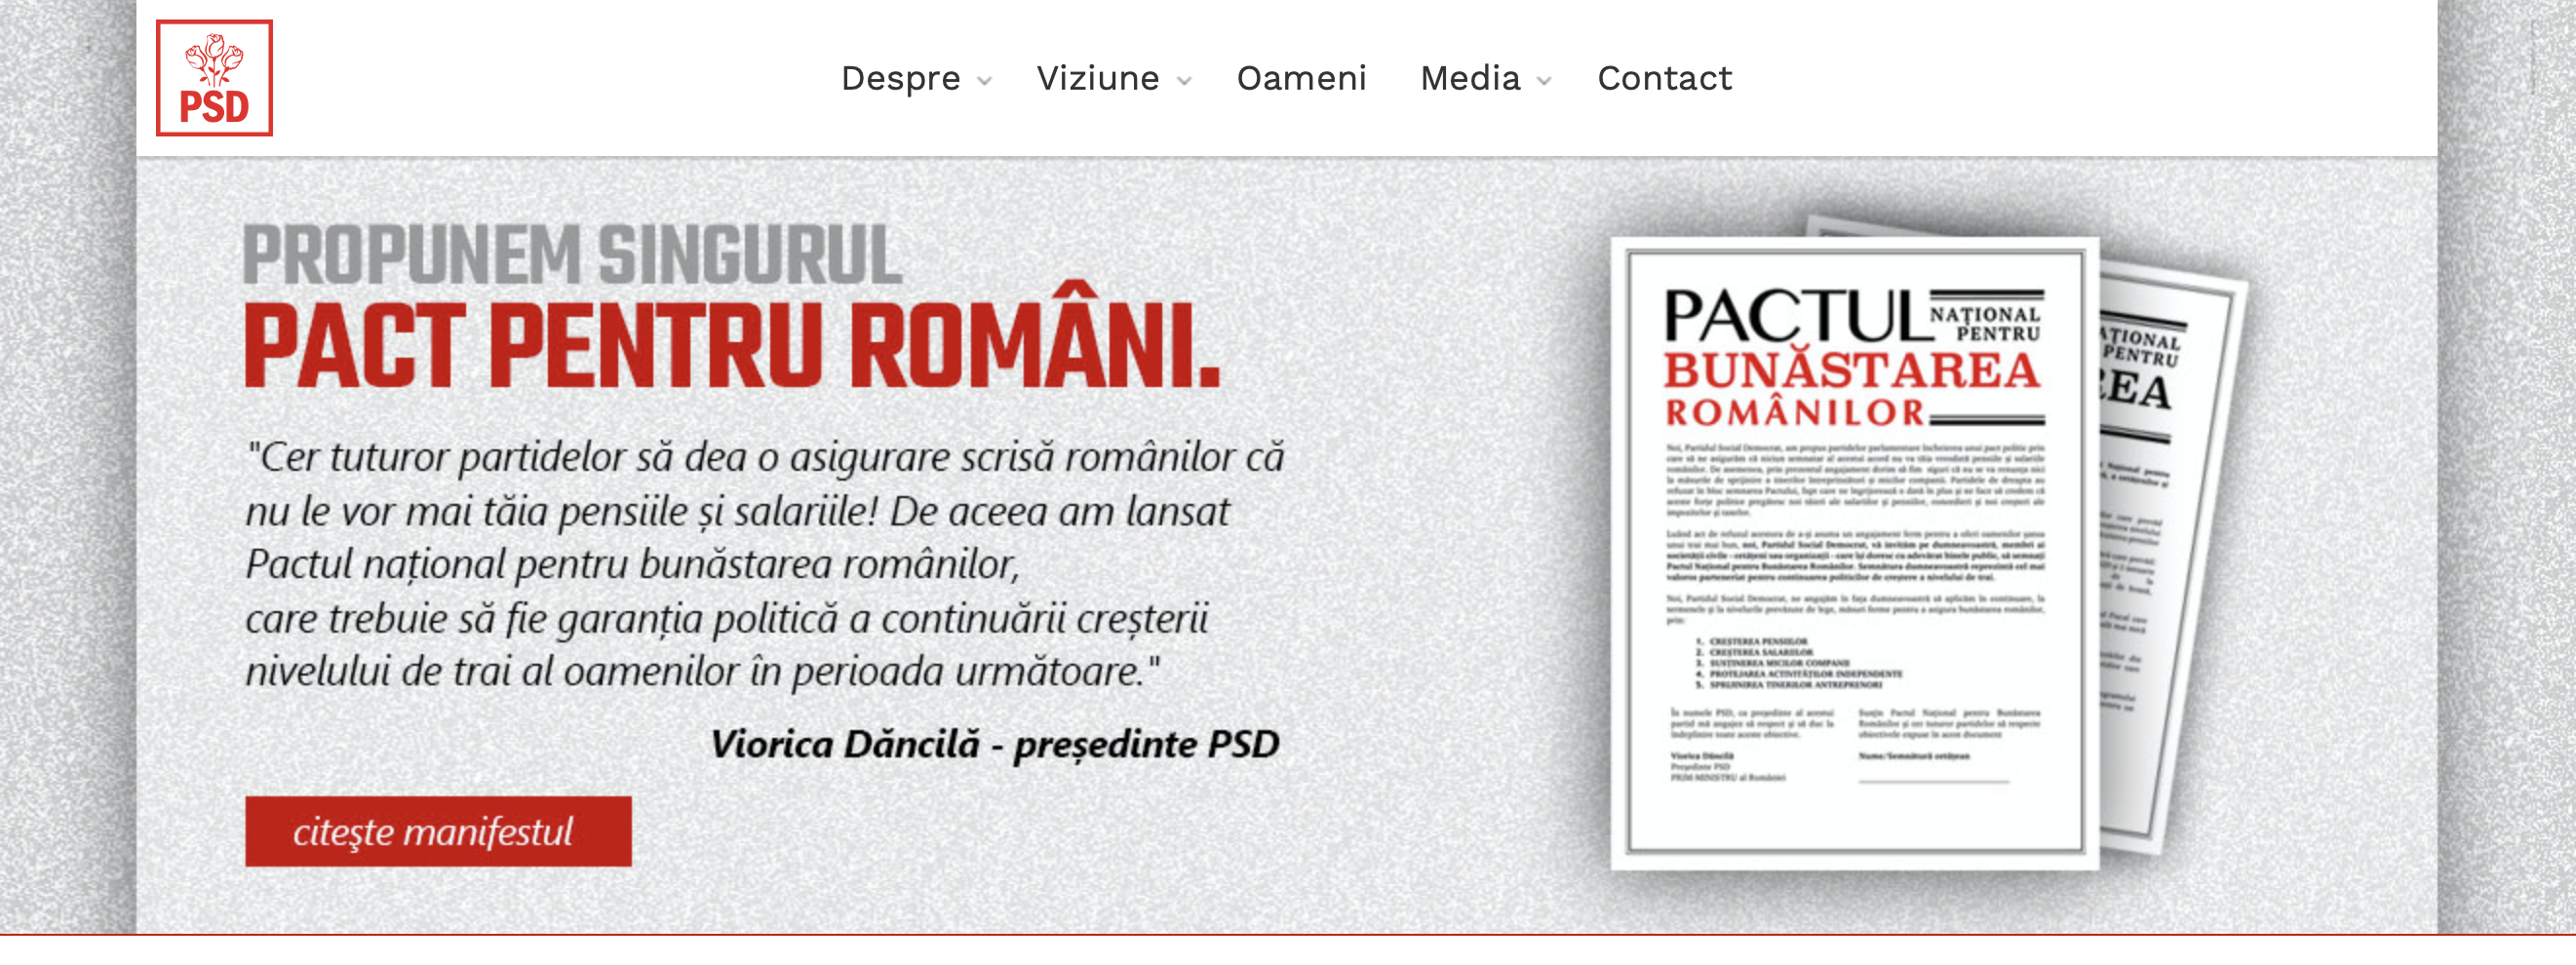 PSD's website